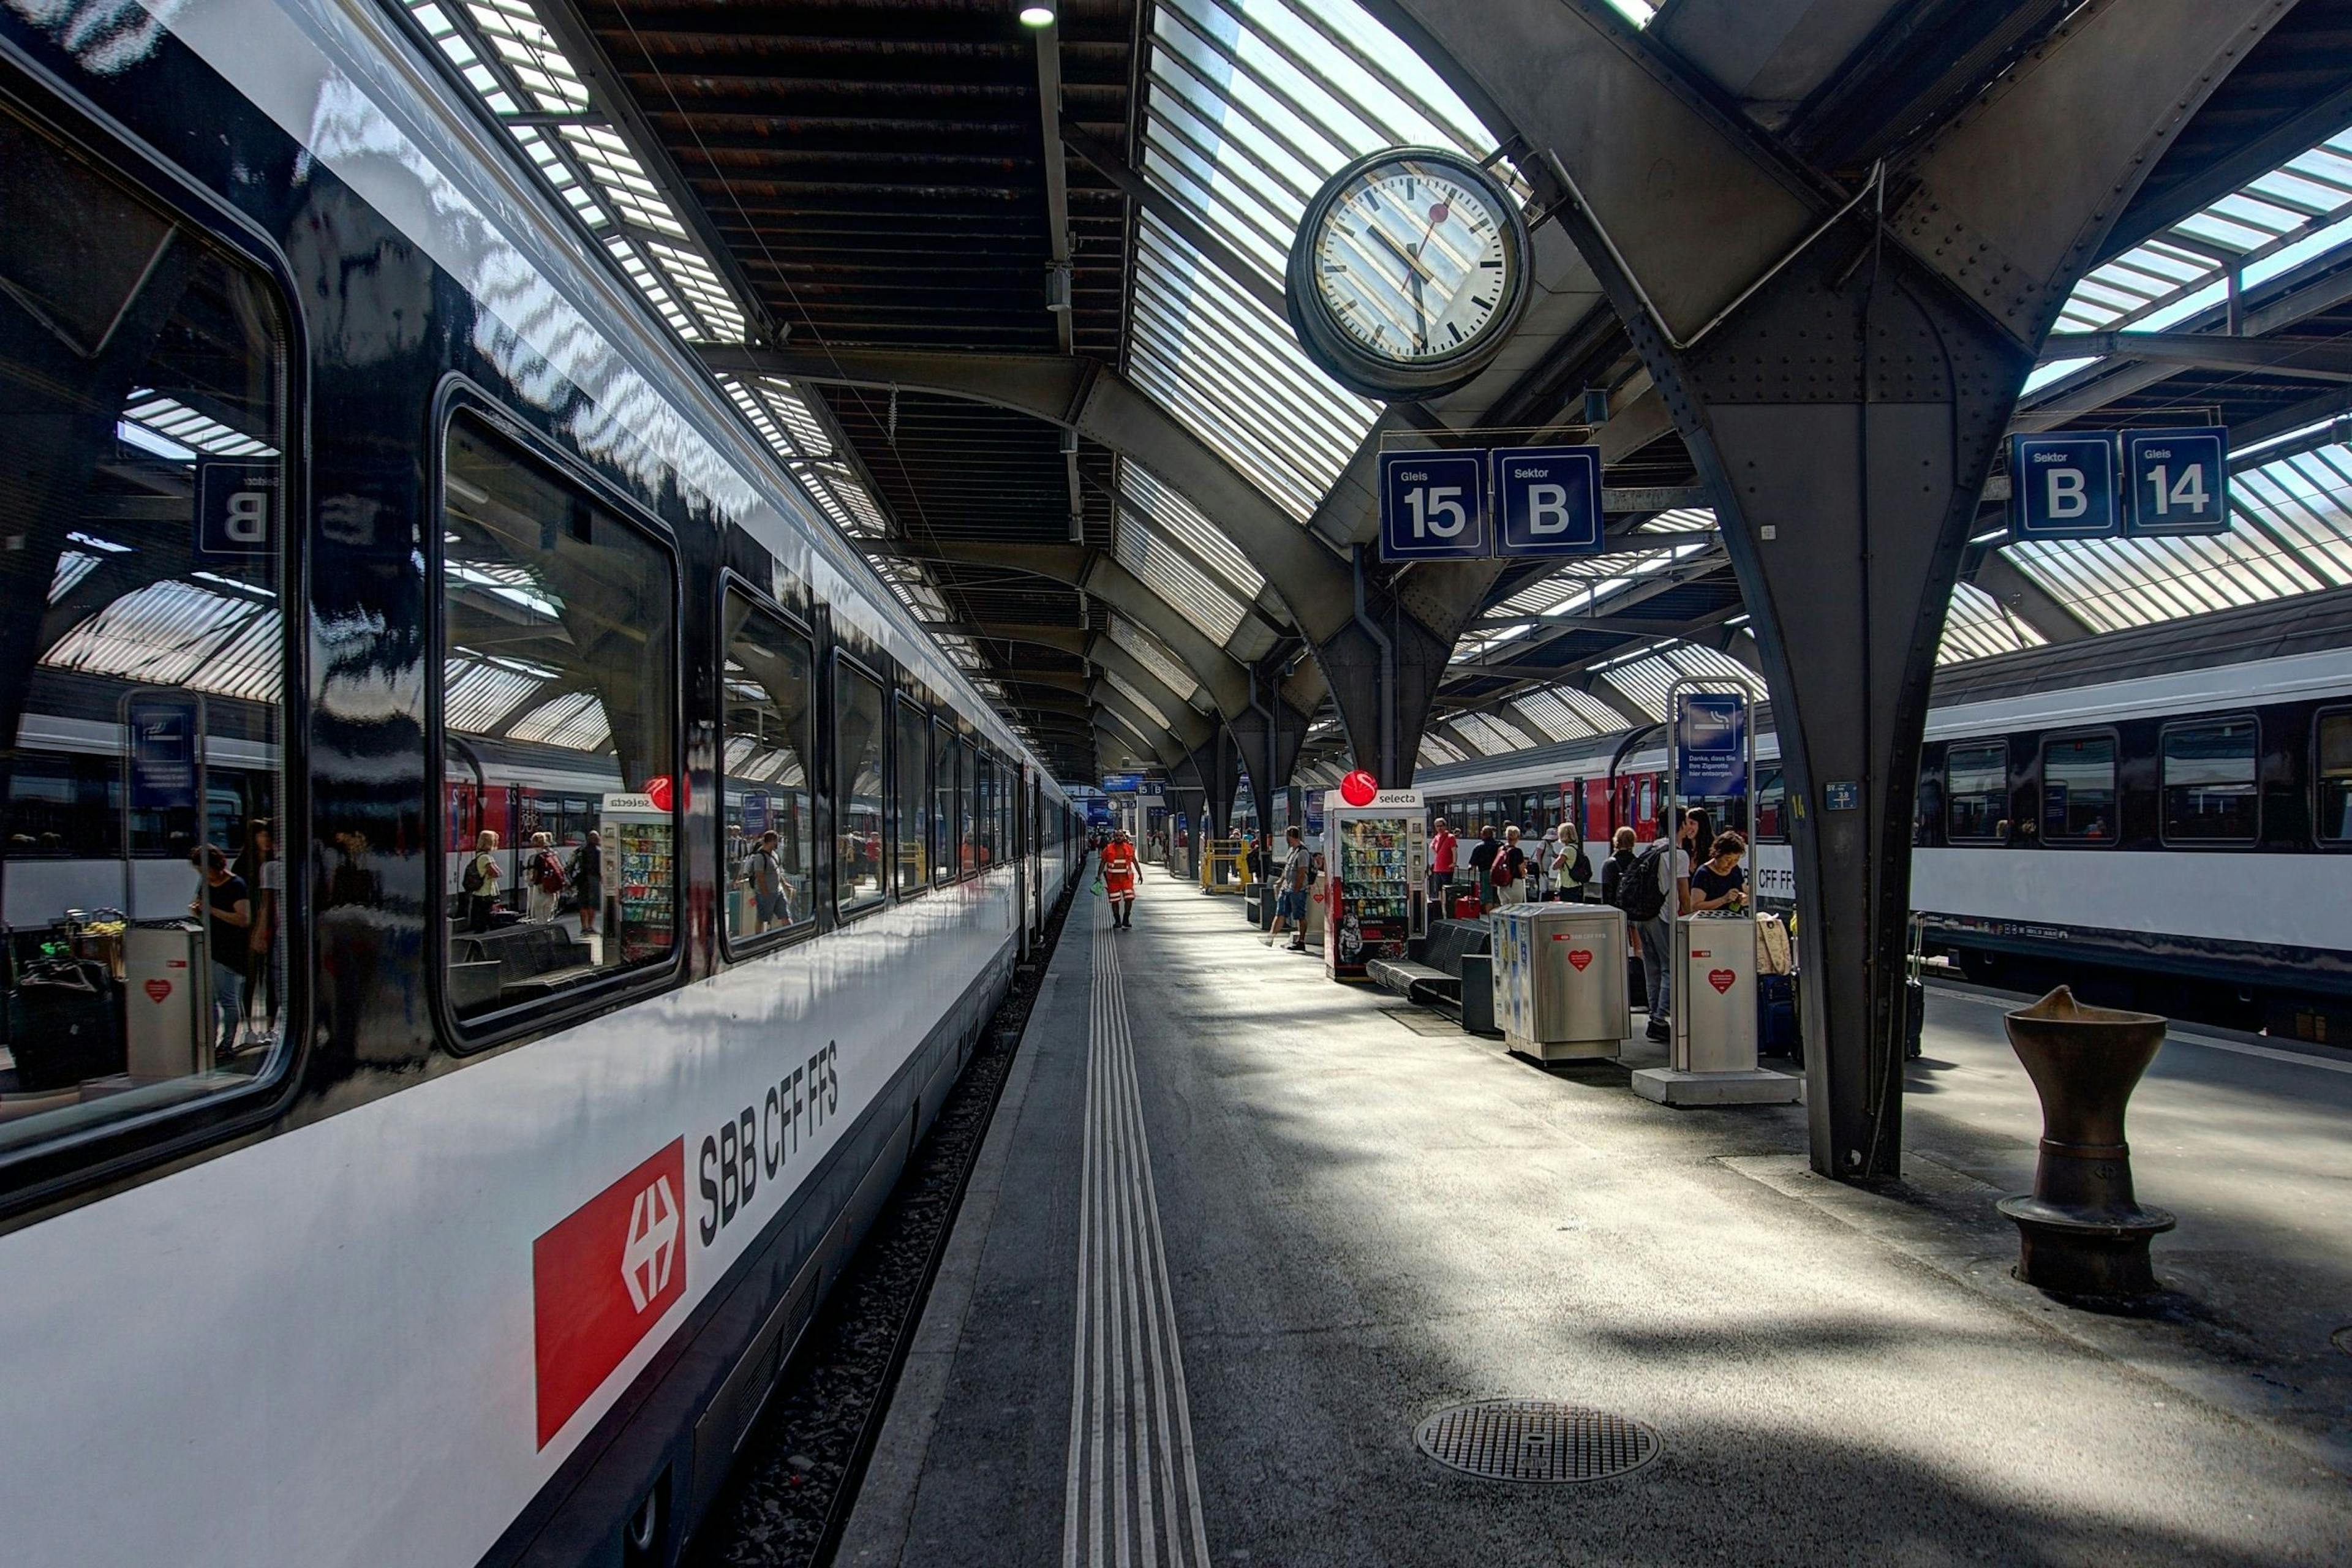 Train ticket from Domodossola (Italy) to Switzerland